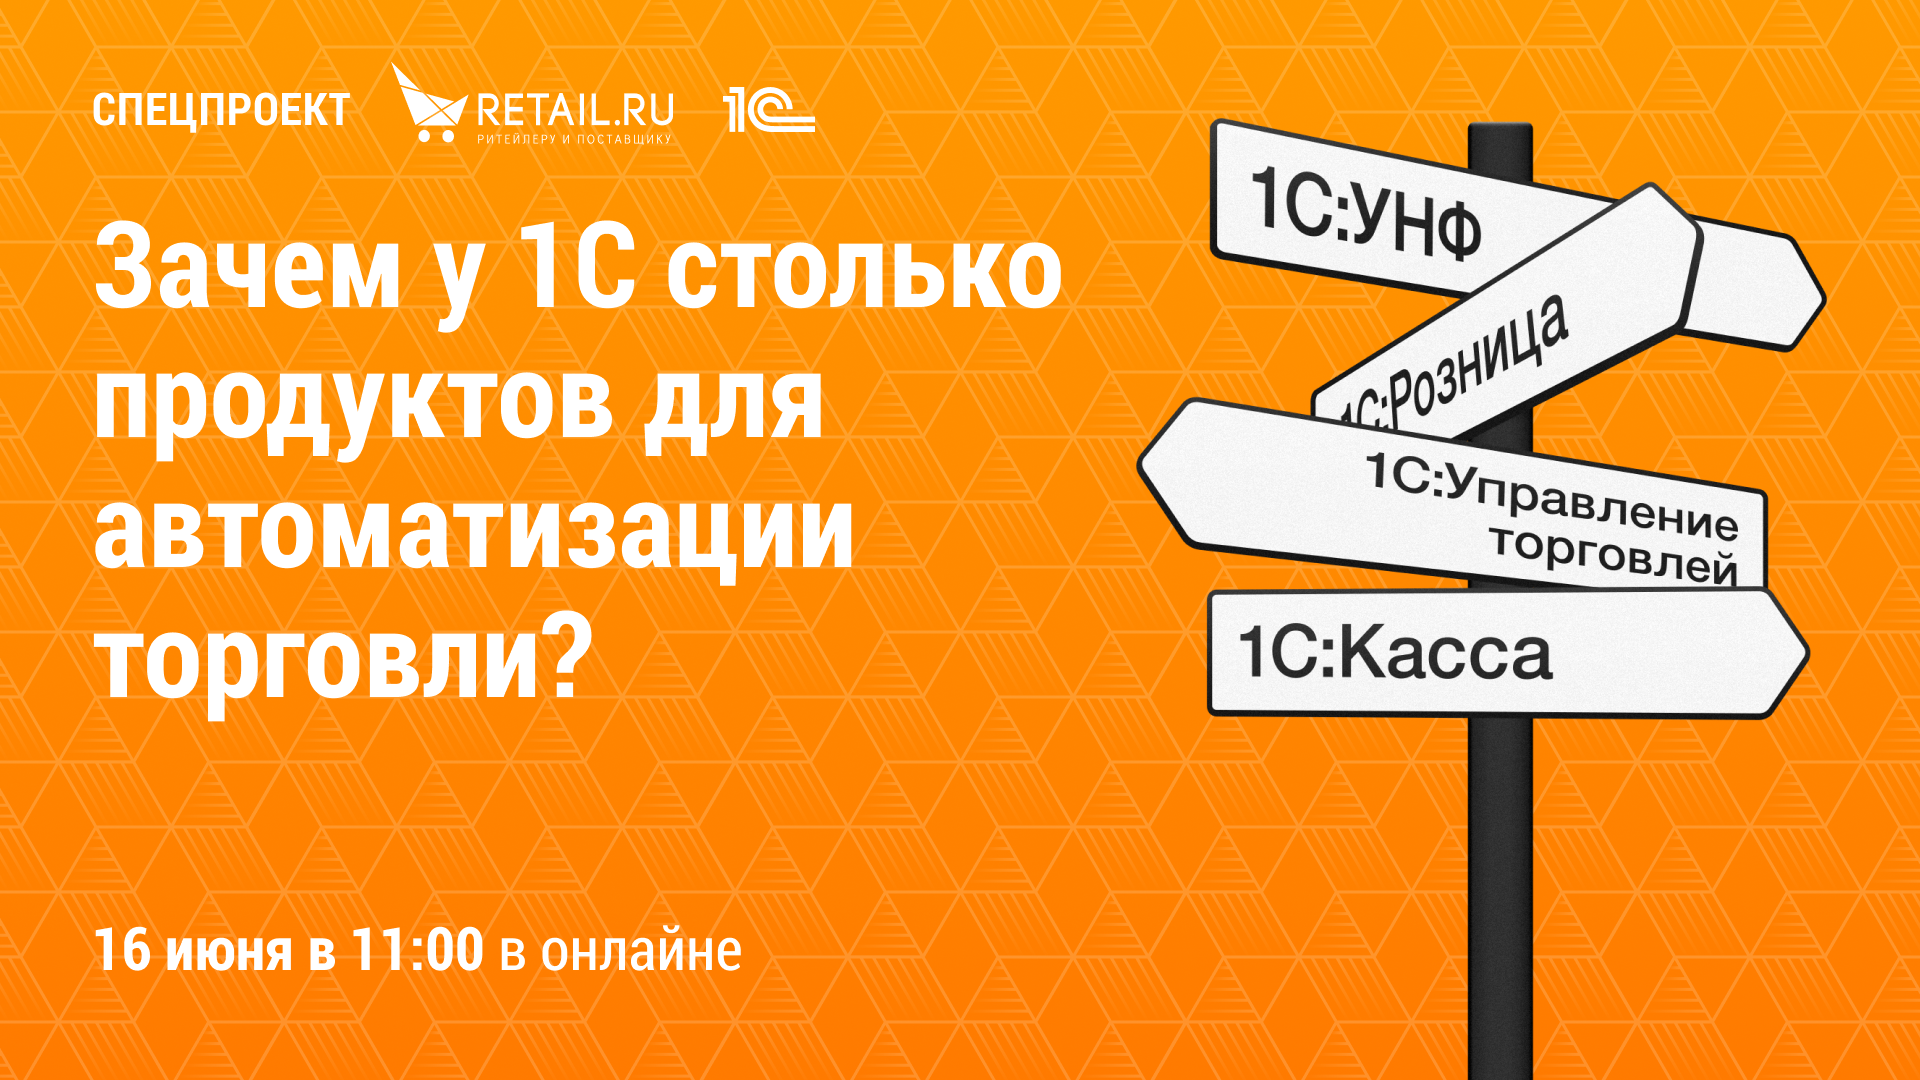 Спецпроект Retail.ru и 1С